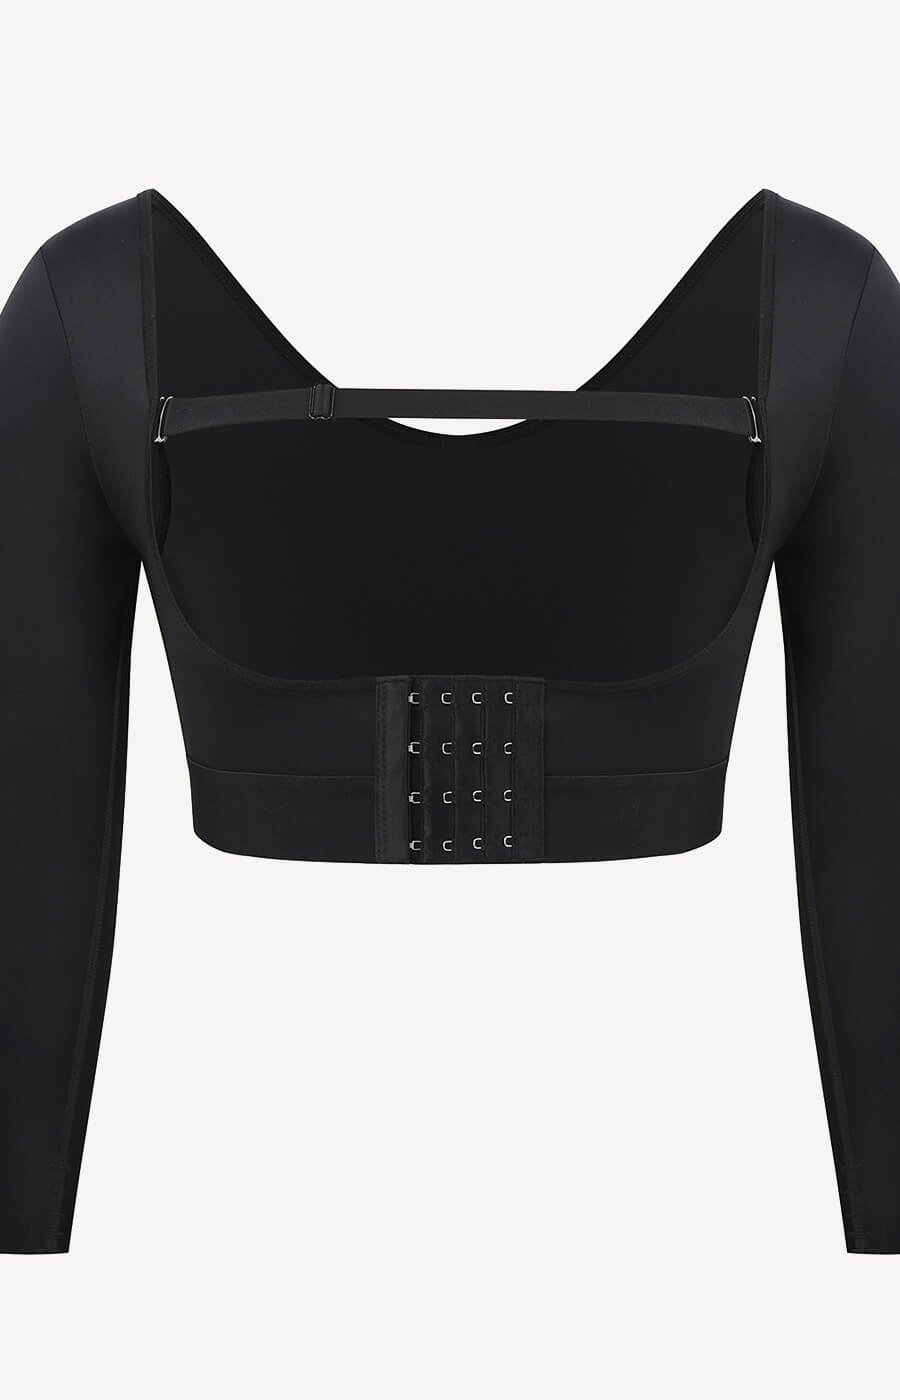 Amazing Arm Shaper 2.0 with Posture Support — Secret Slim Wear